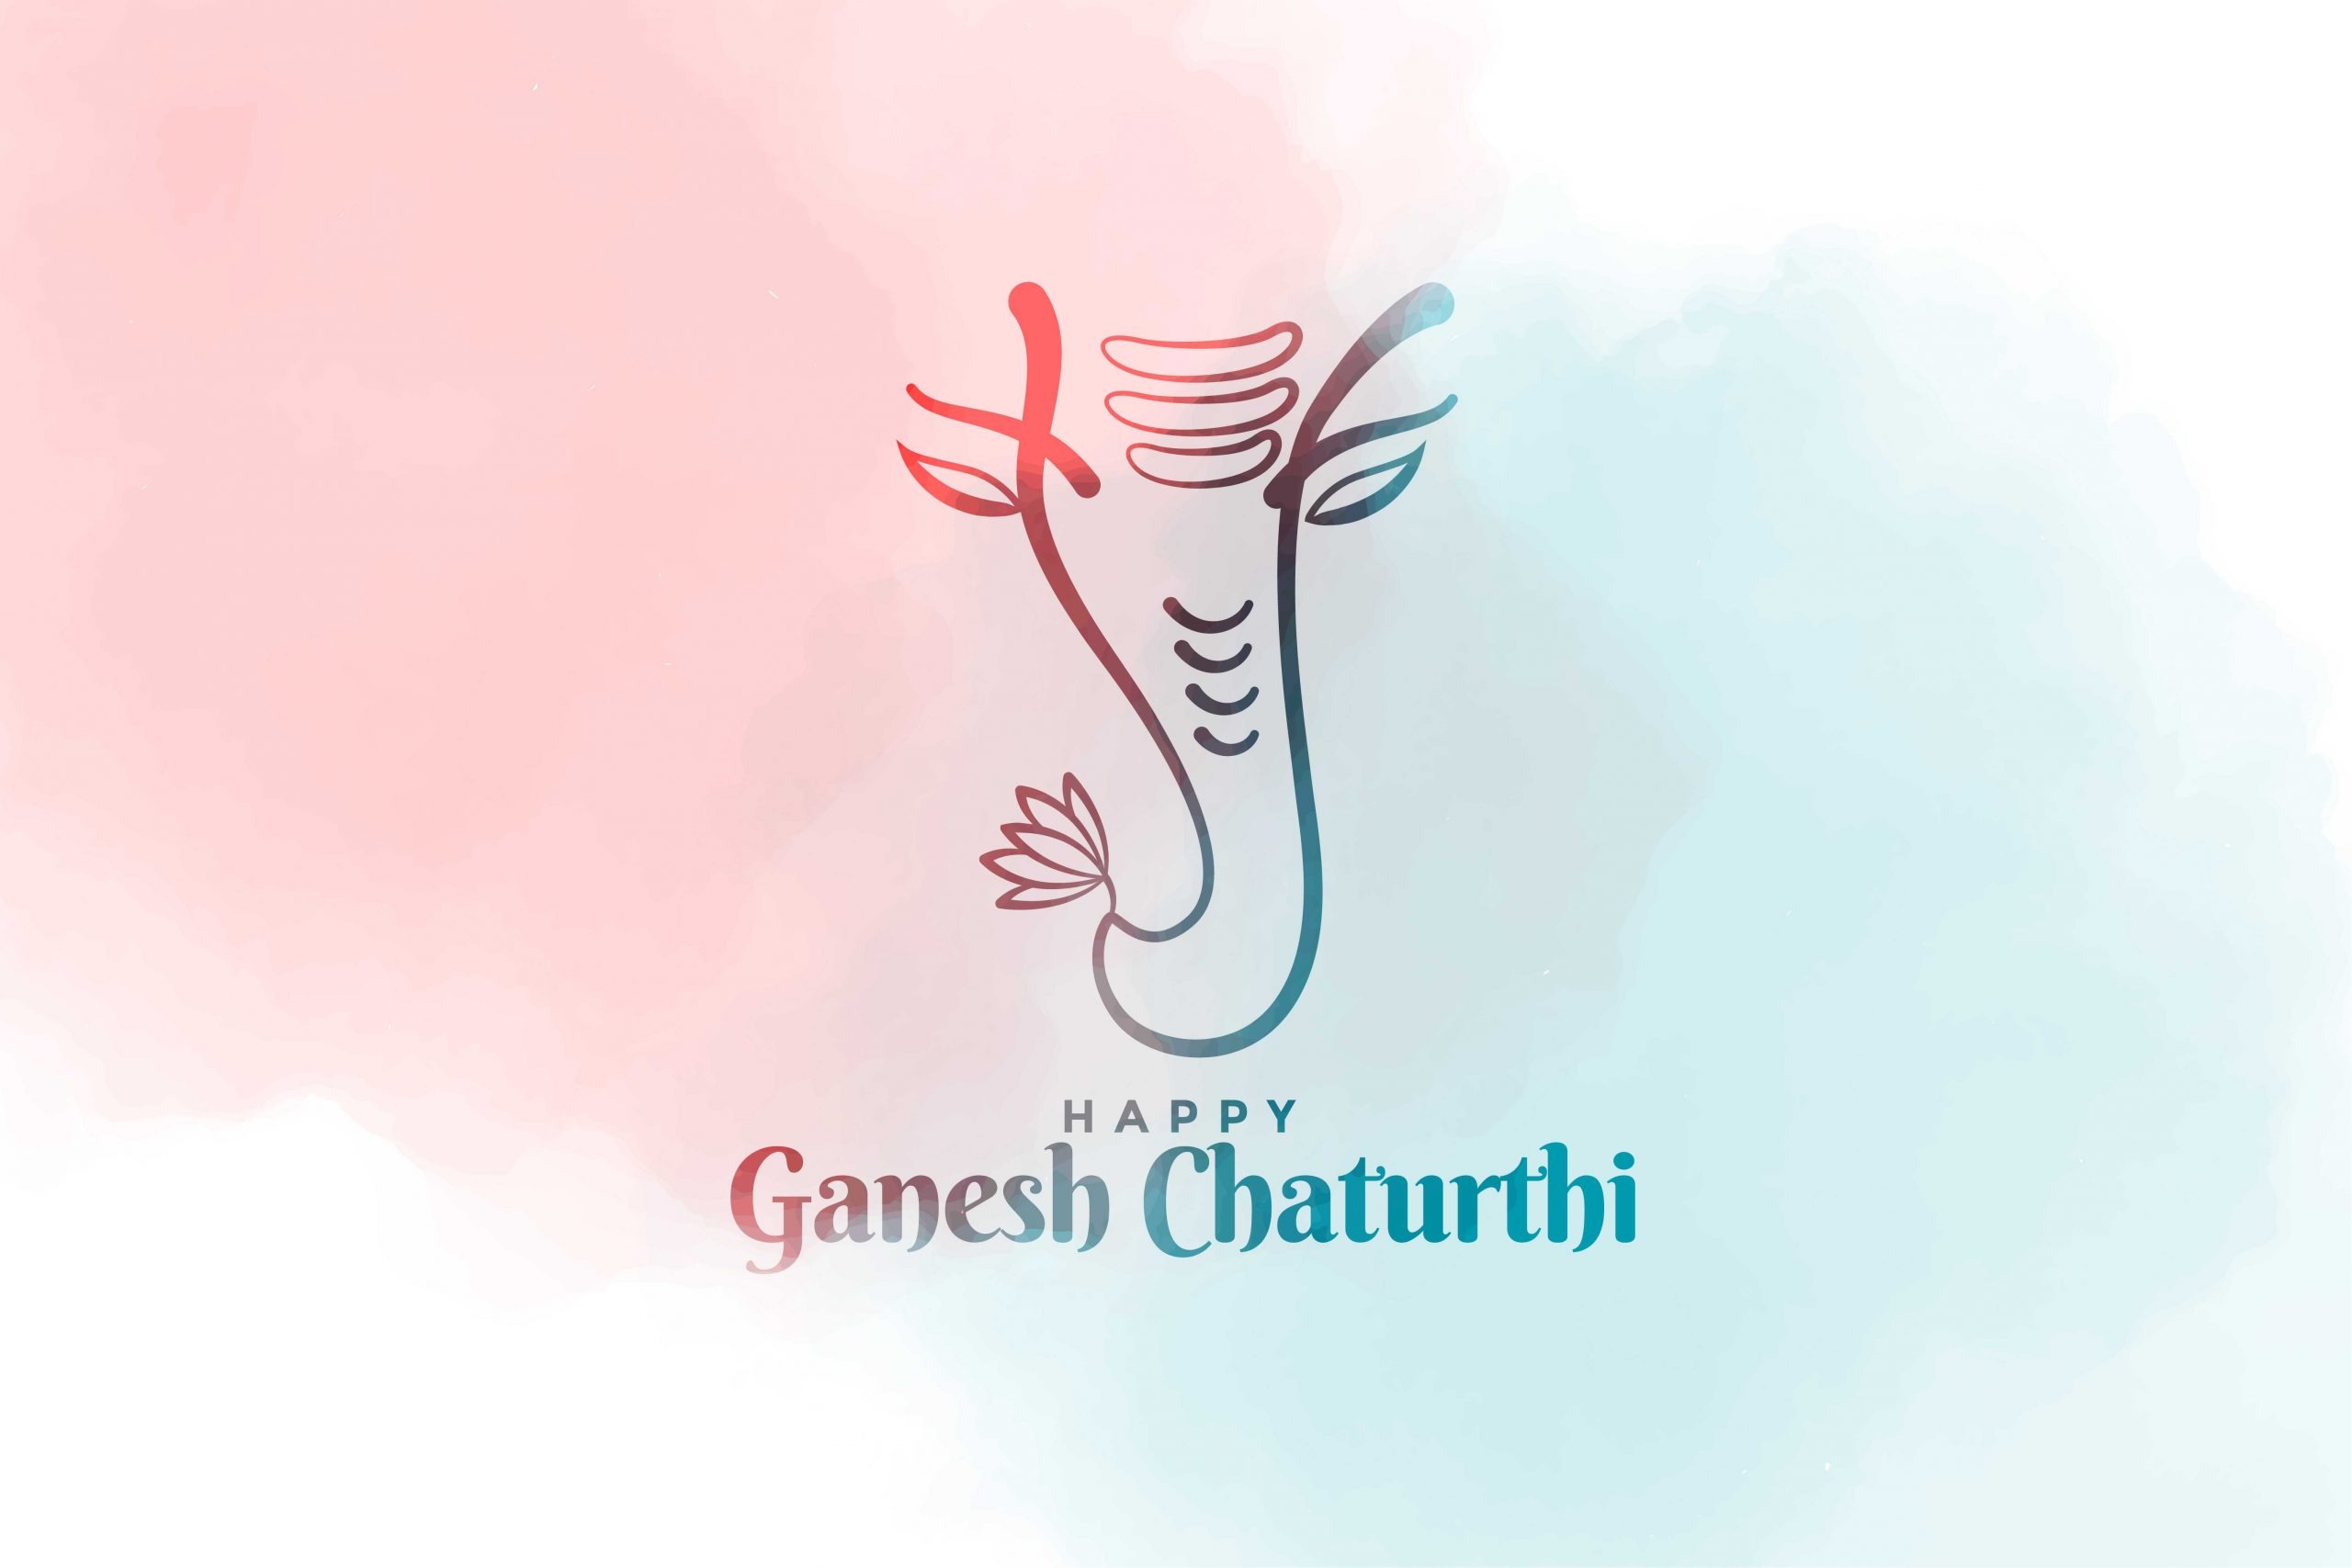 Ganesh Chaturthi photo